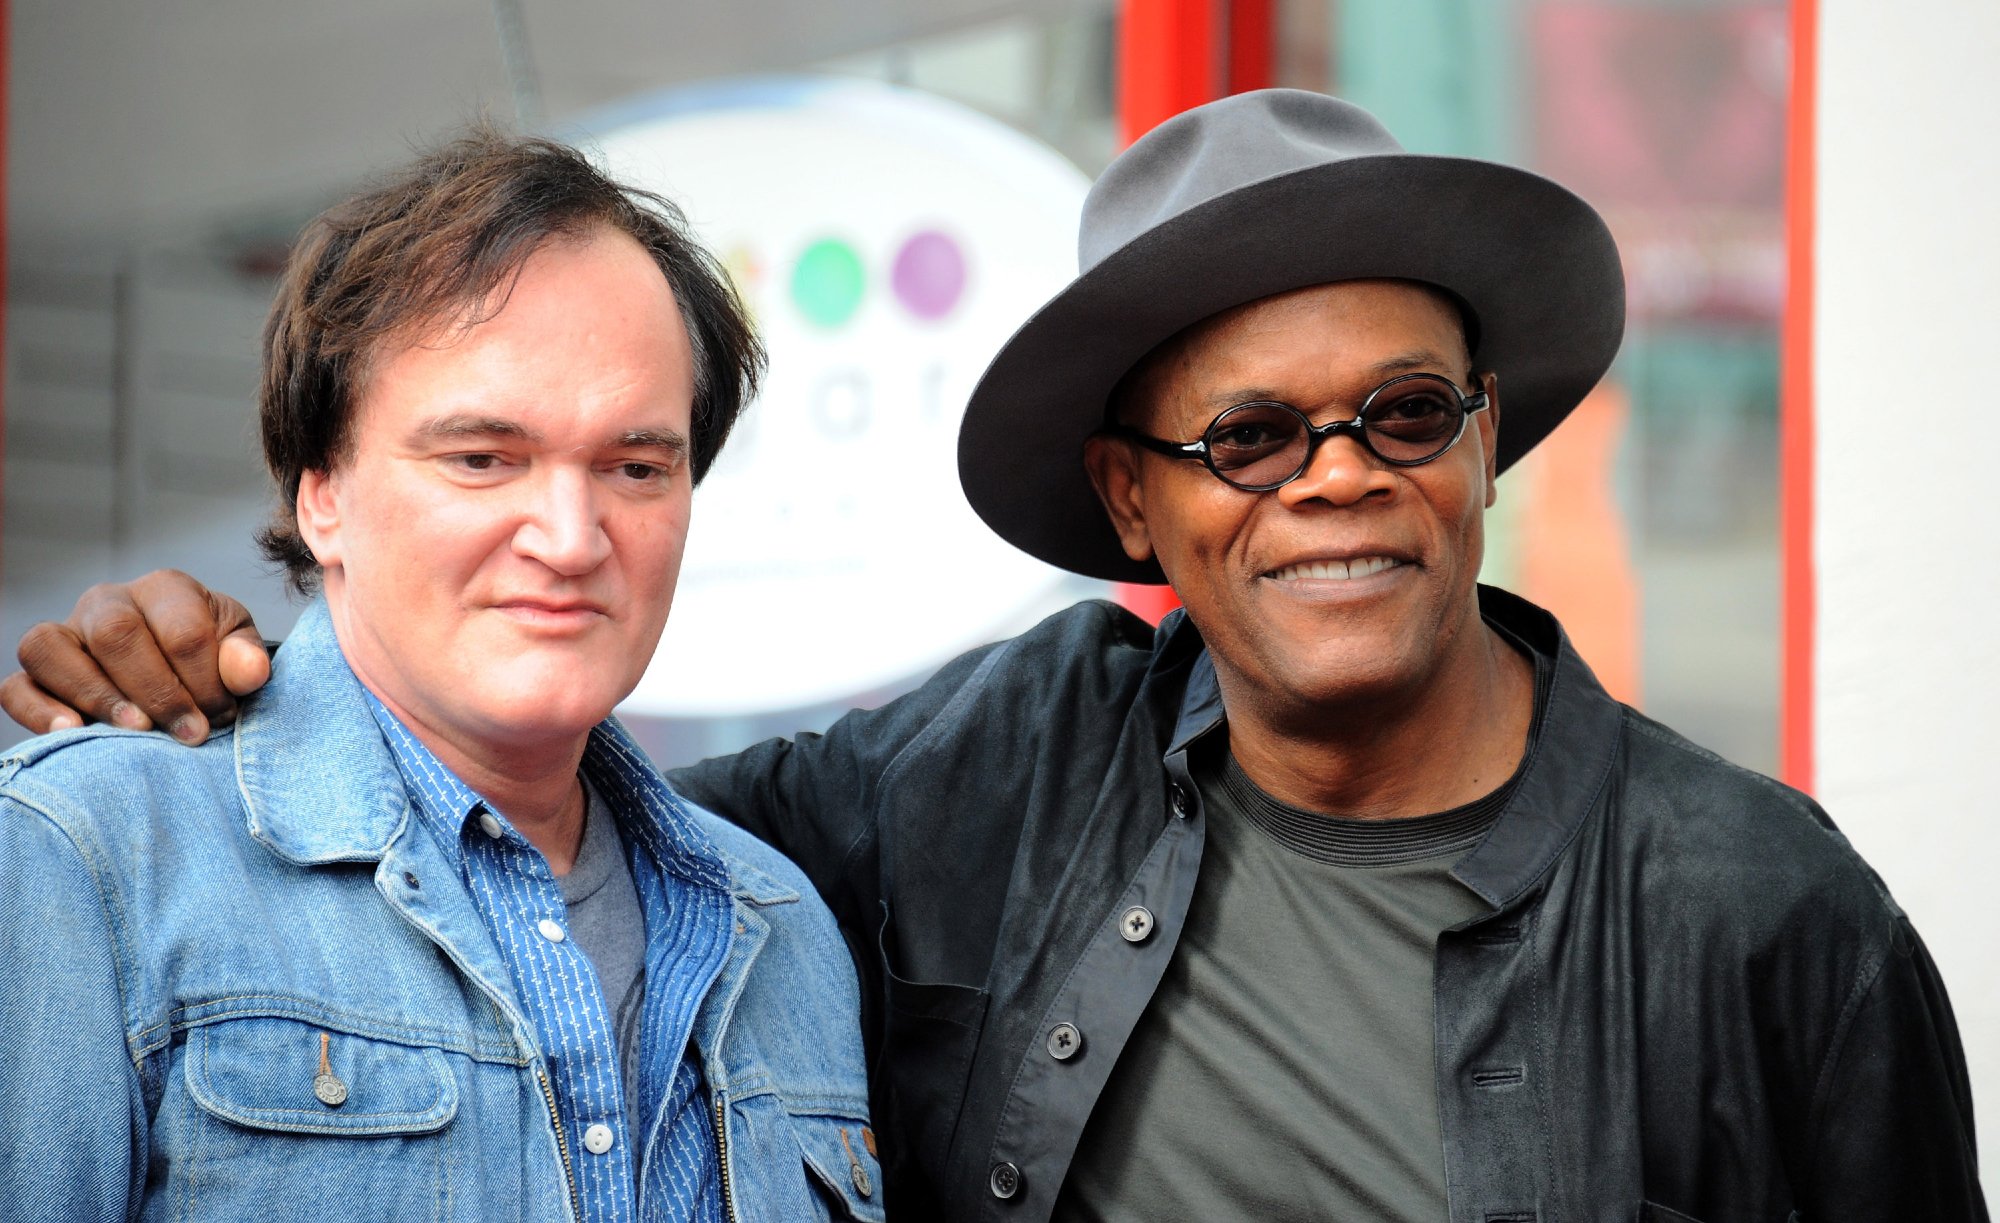 Quentin Tarantino and Samuel L. Jackson at the Hollywood Walk Of Fame smiling with Jackson's arm around Tarantino